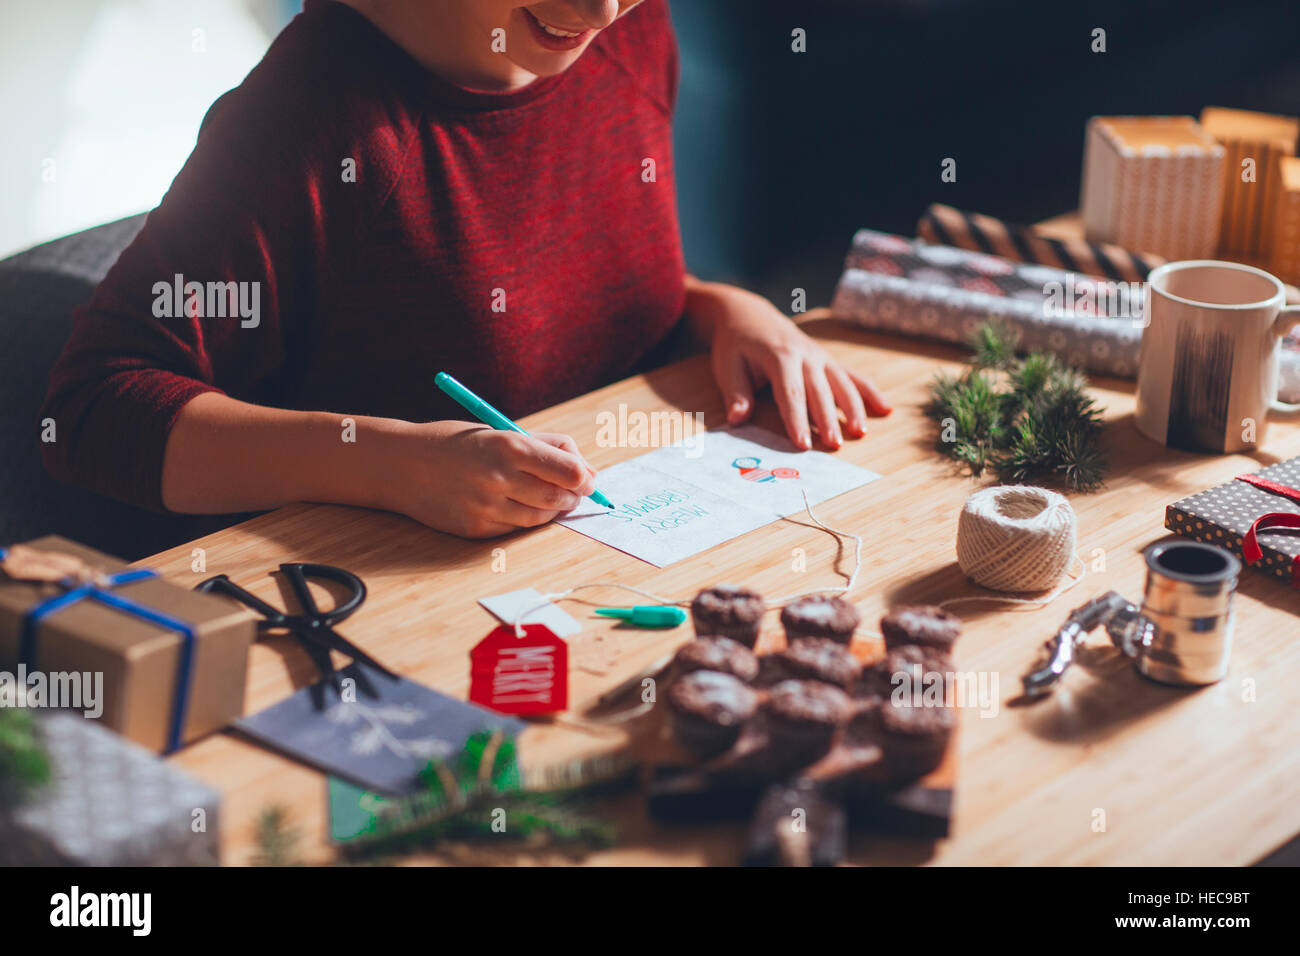 Woman writing Christmas card in Christmas setting Stock Photo